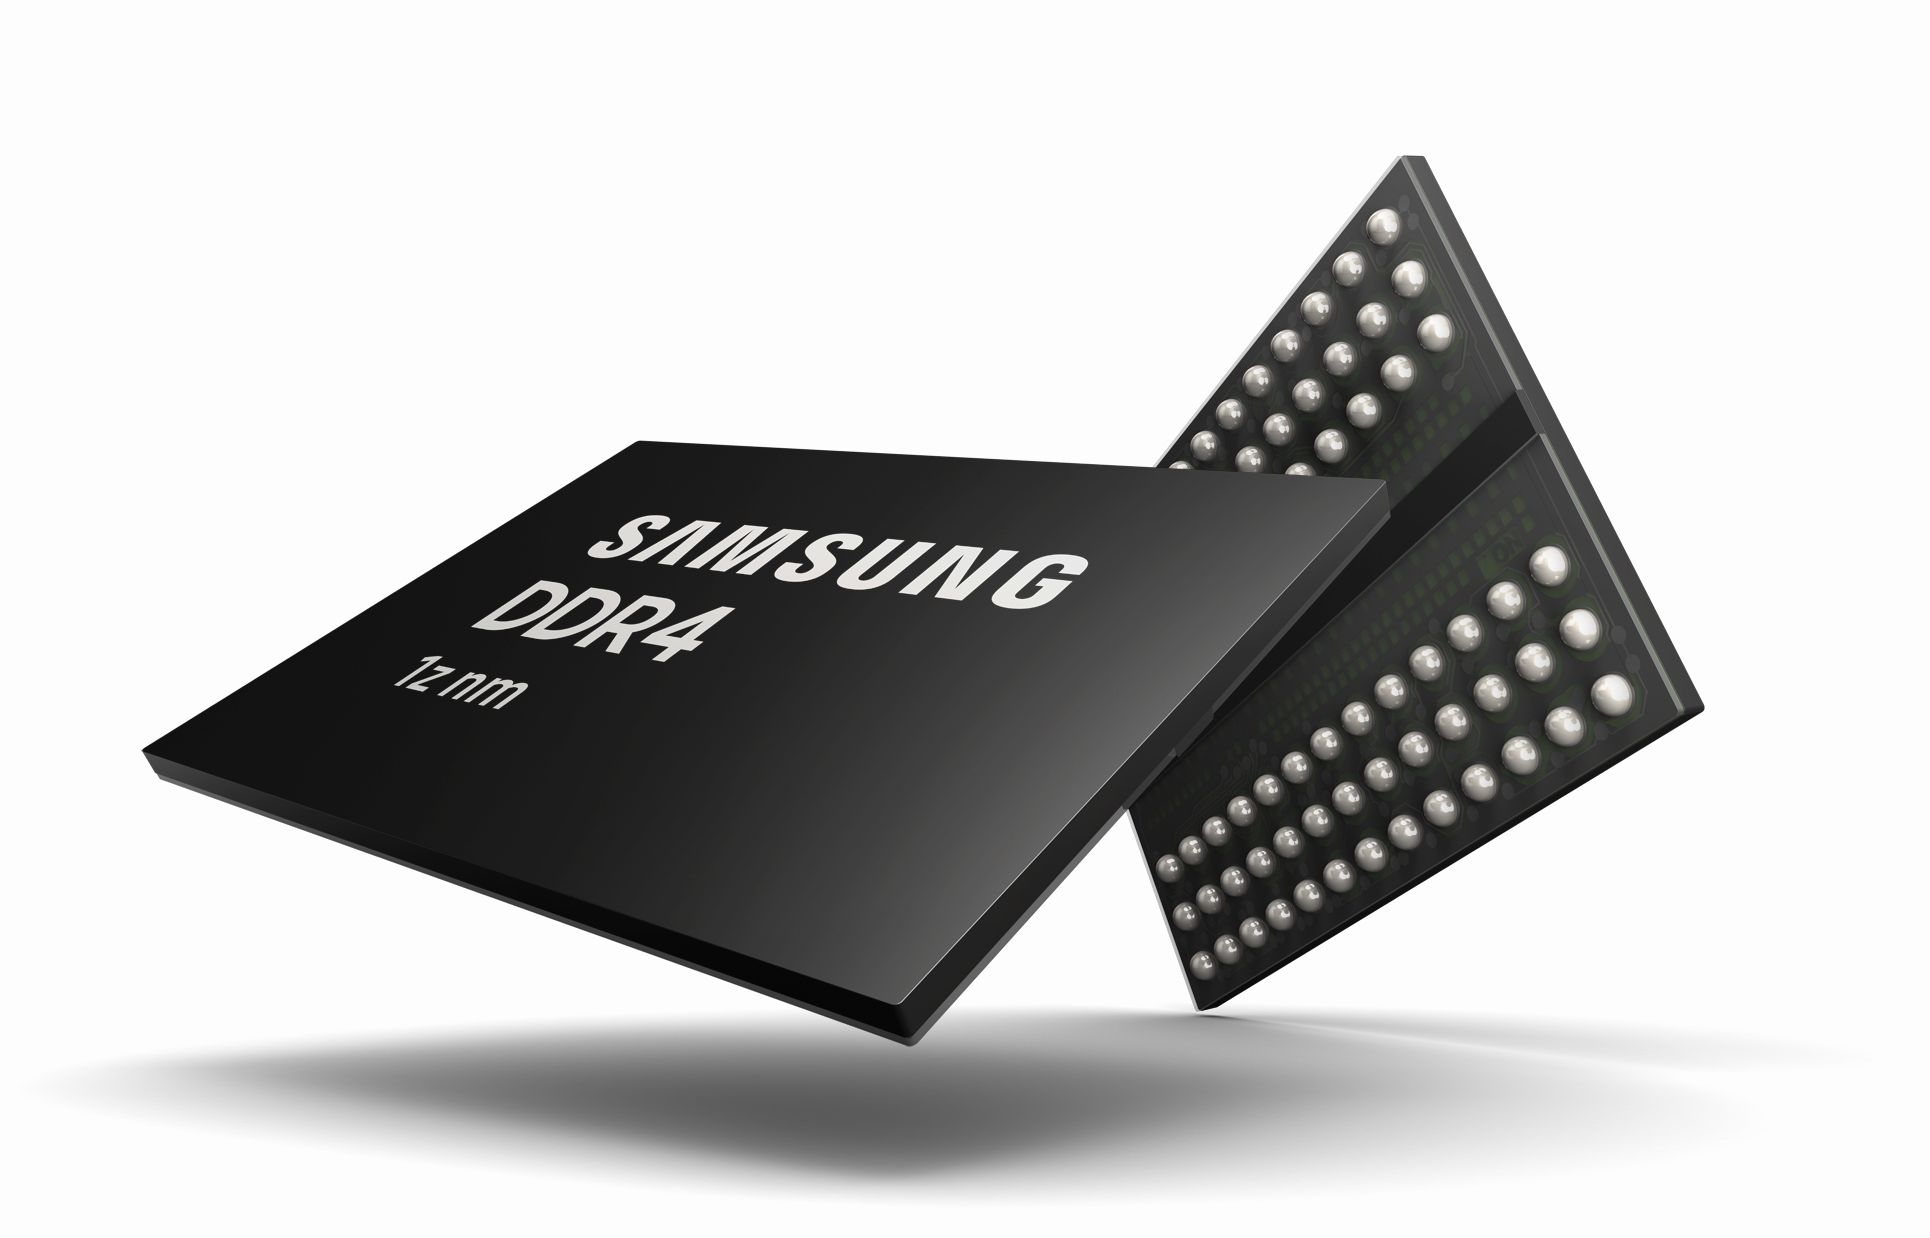 Samsung Develops Industry’s First 3rd-generation 10nm-Class DRAM